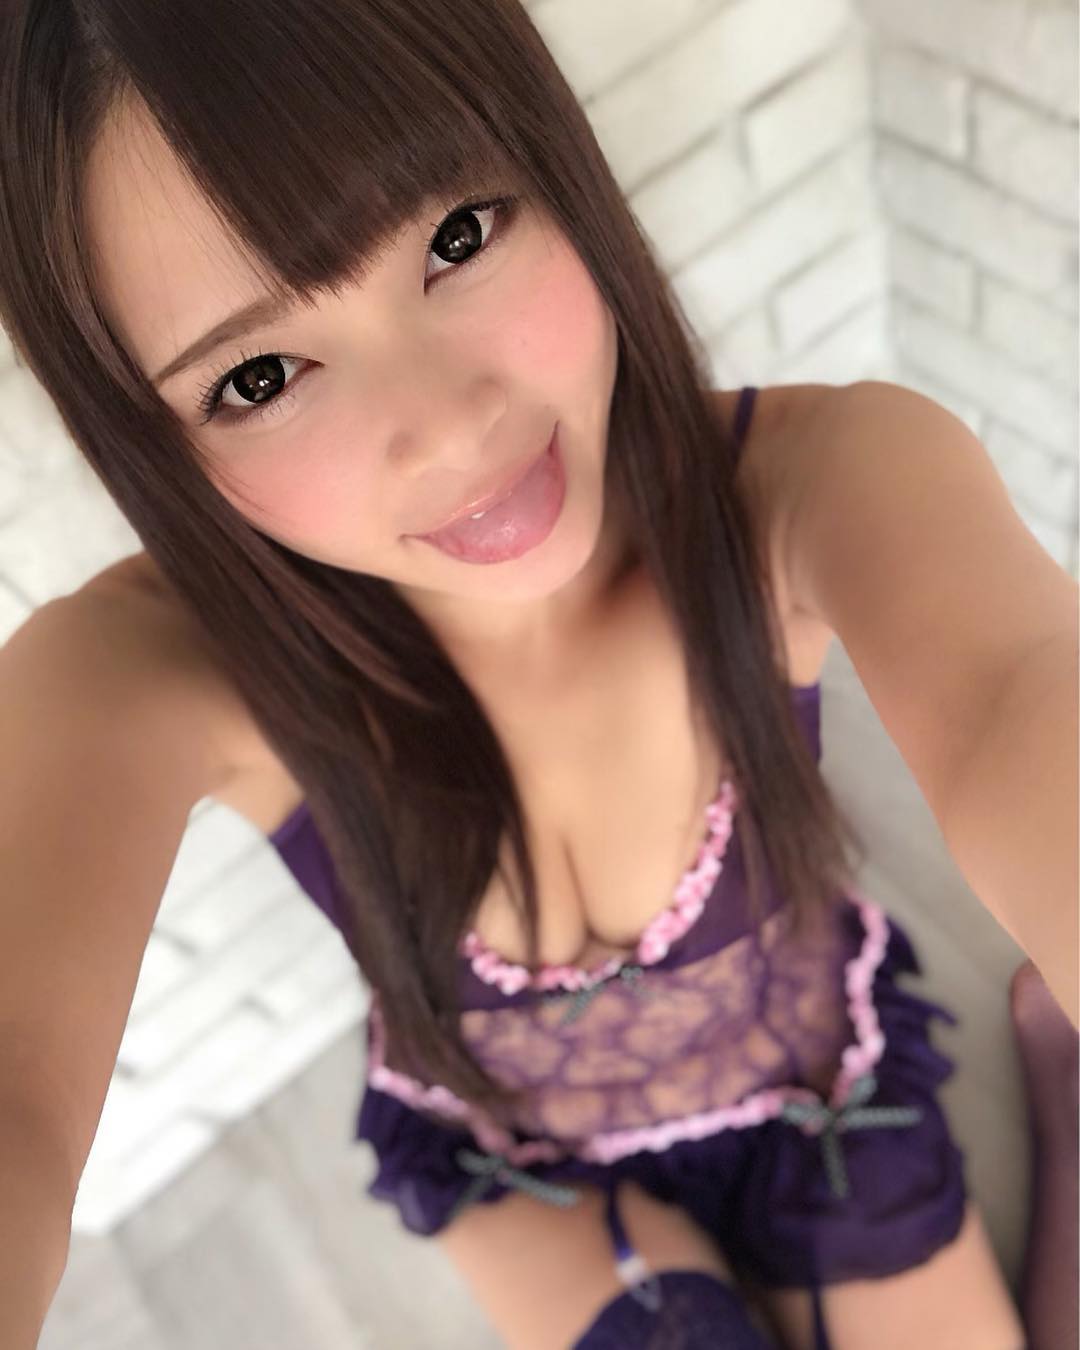 Cute Japanese girl Natsumi Airi in a plum colored lingerie nightgown